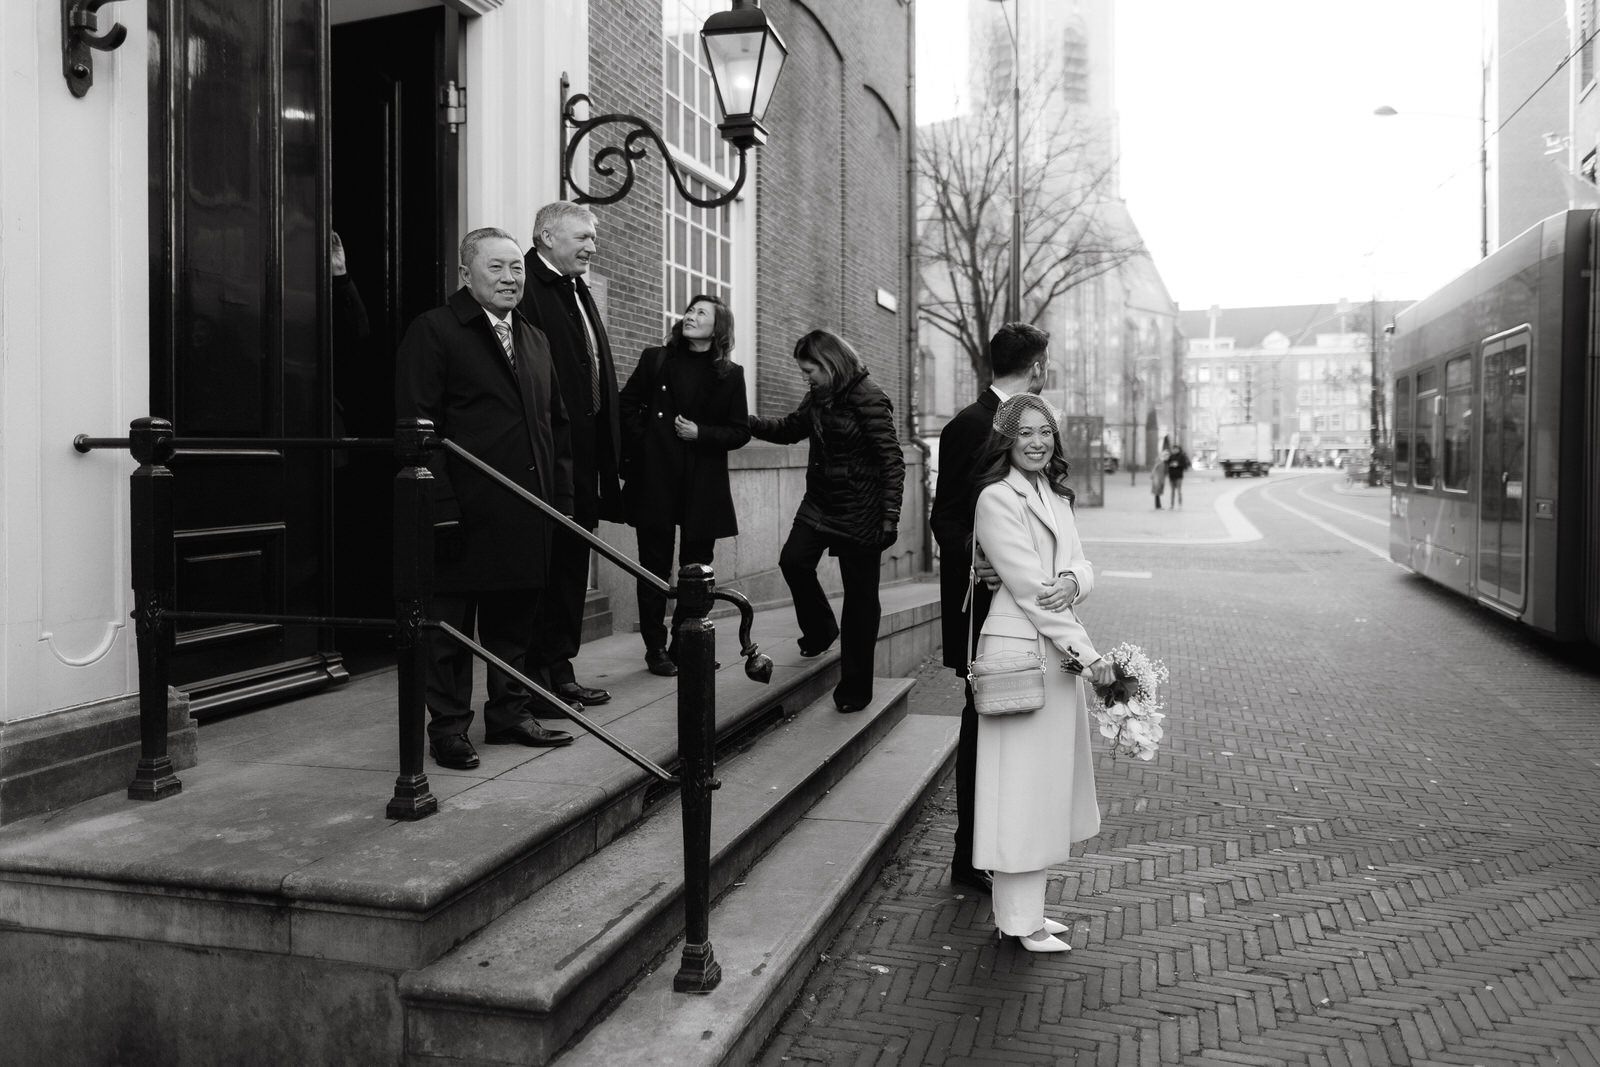 Hague old city hall wedding